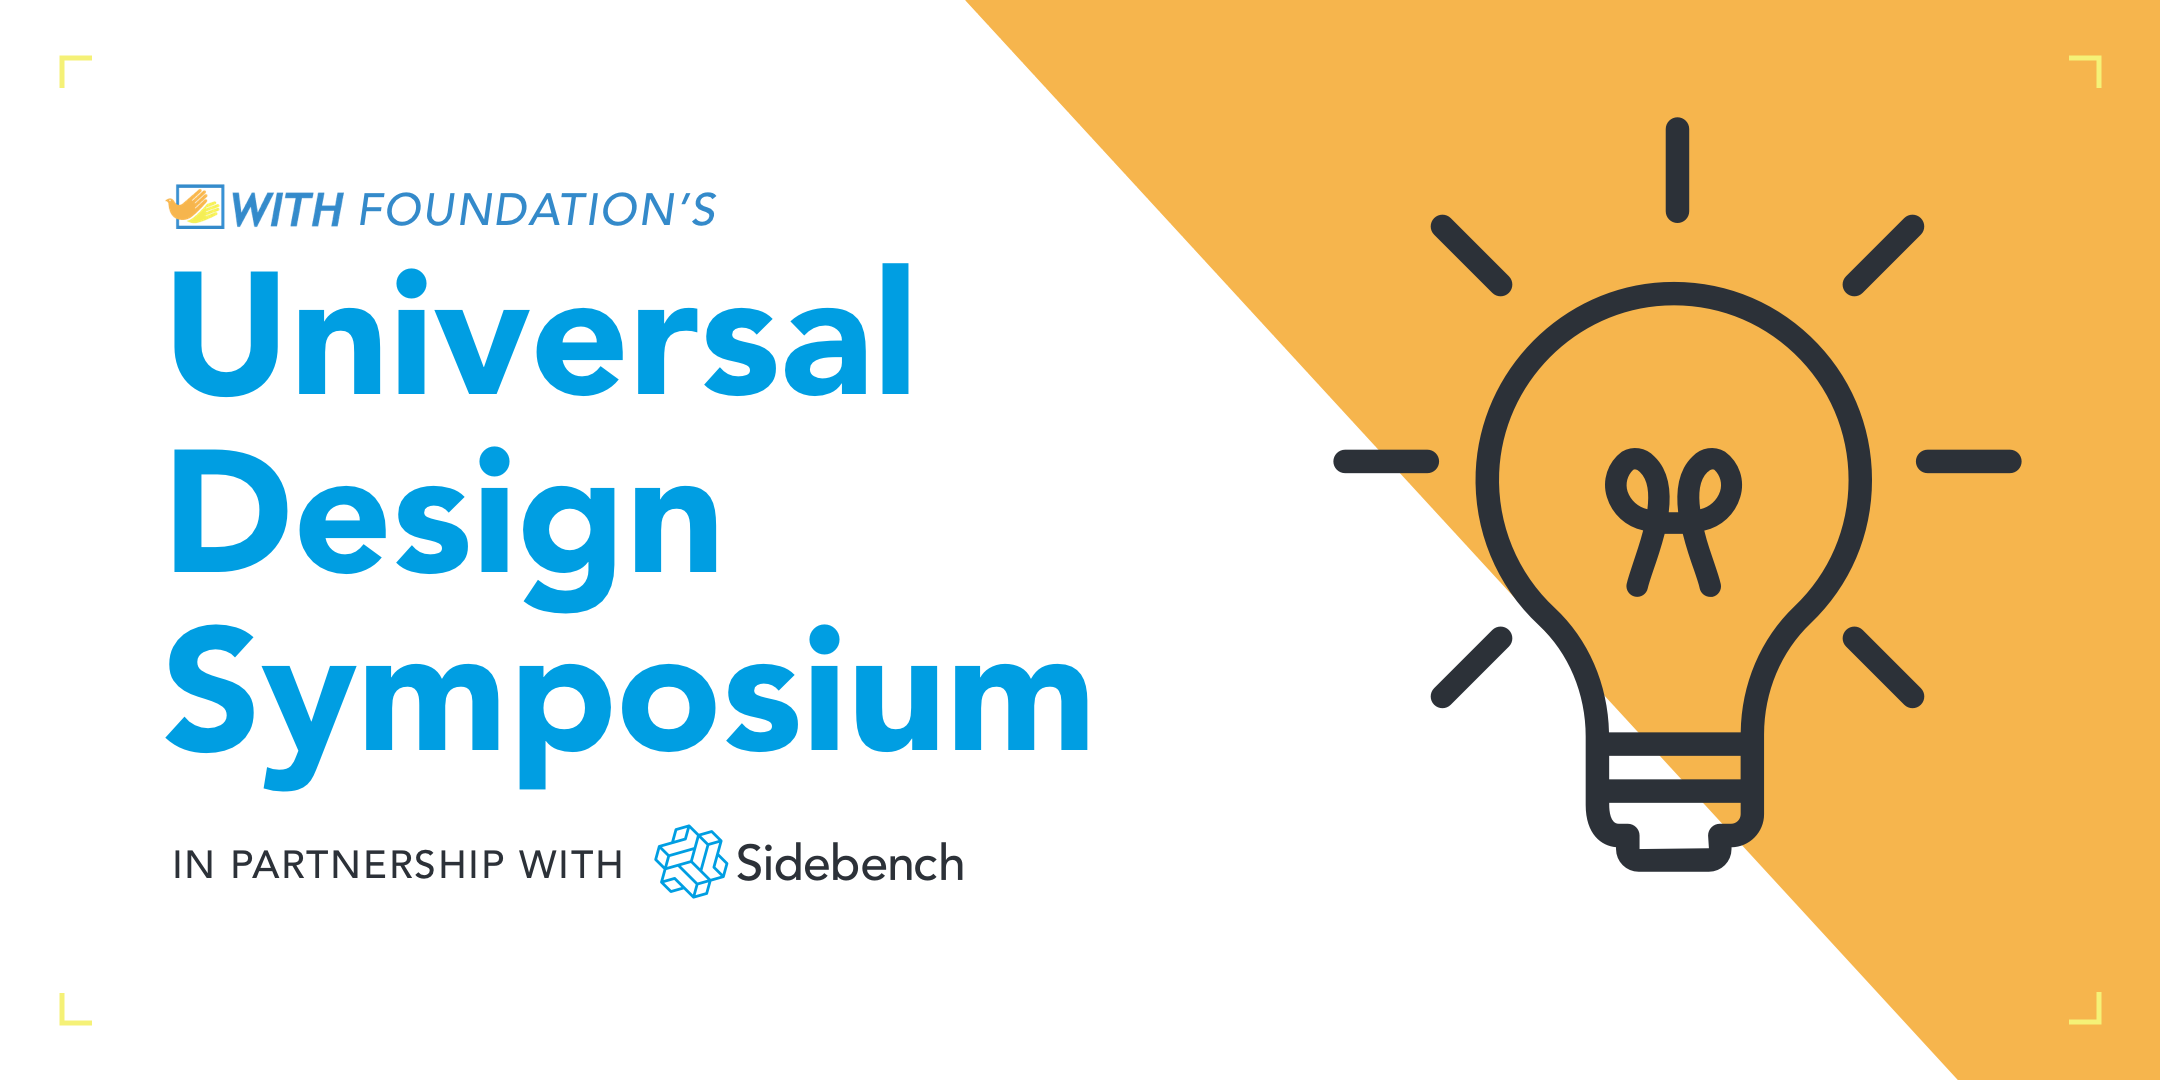 WITH Foundation Mobile App Developer Design Events universal design symposium 